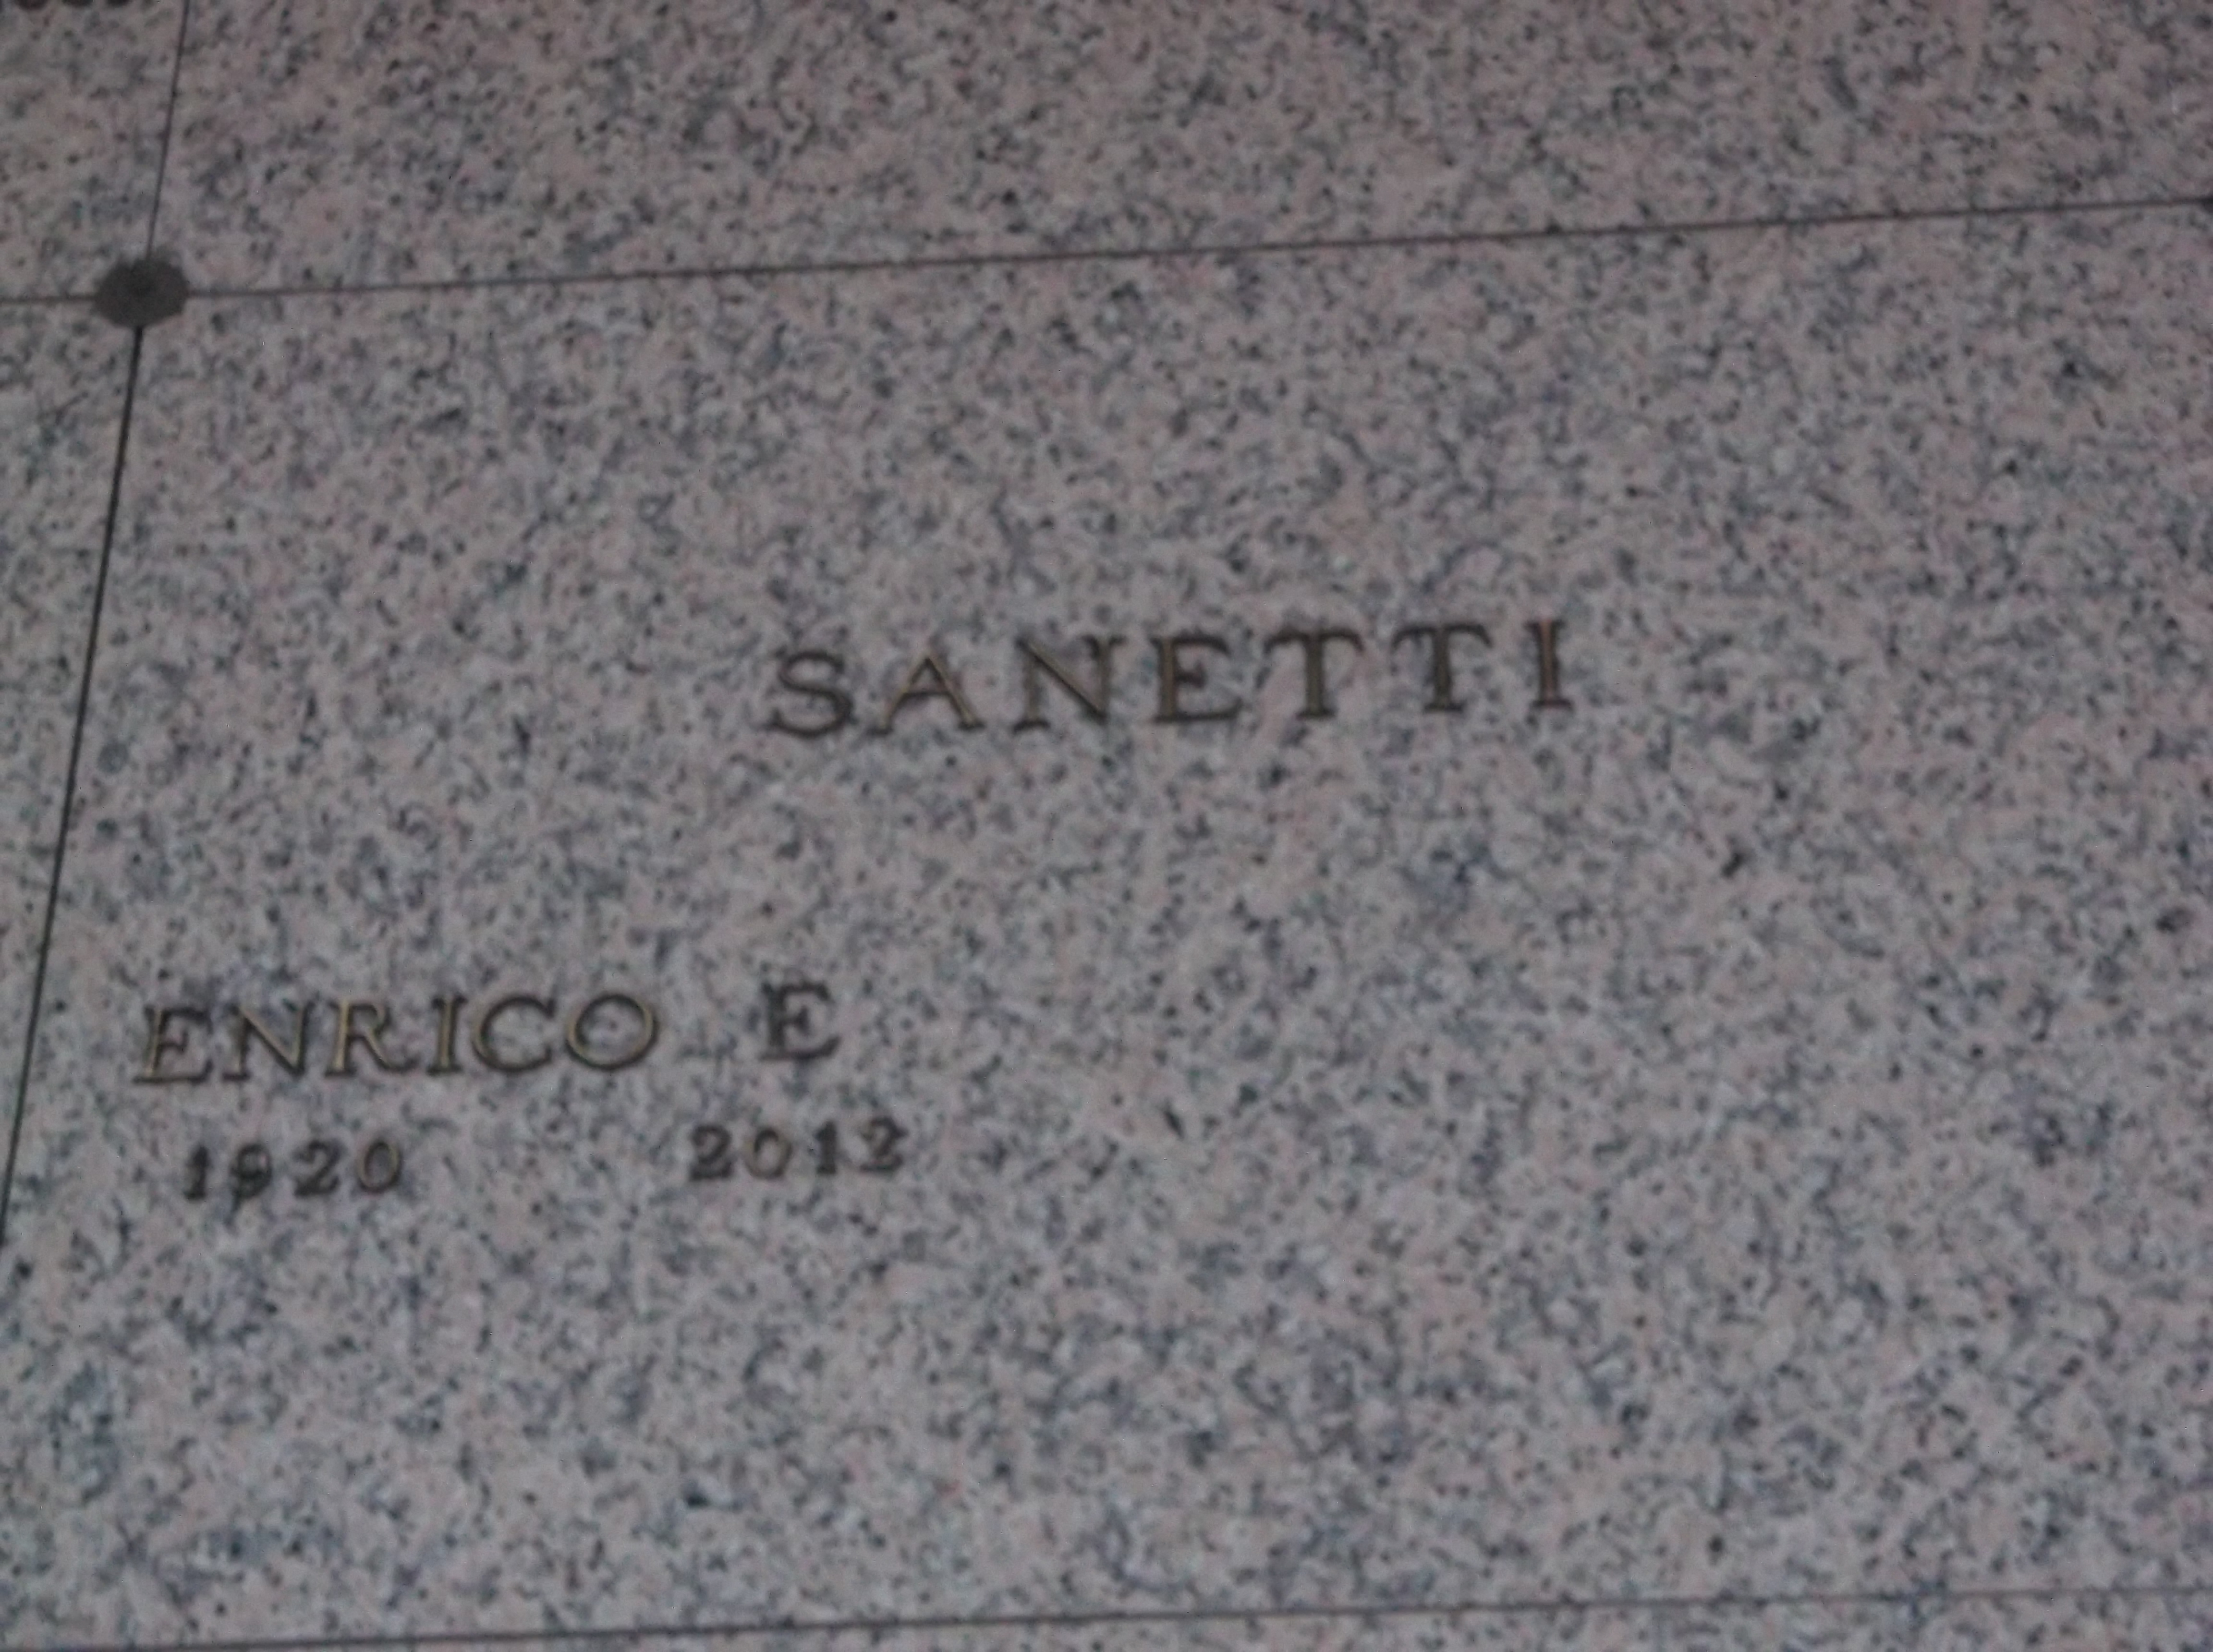 Enrico E Sanetti